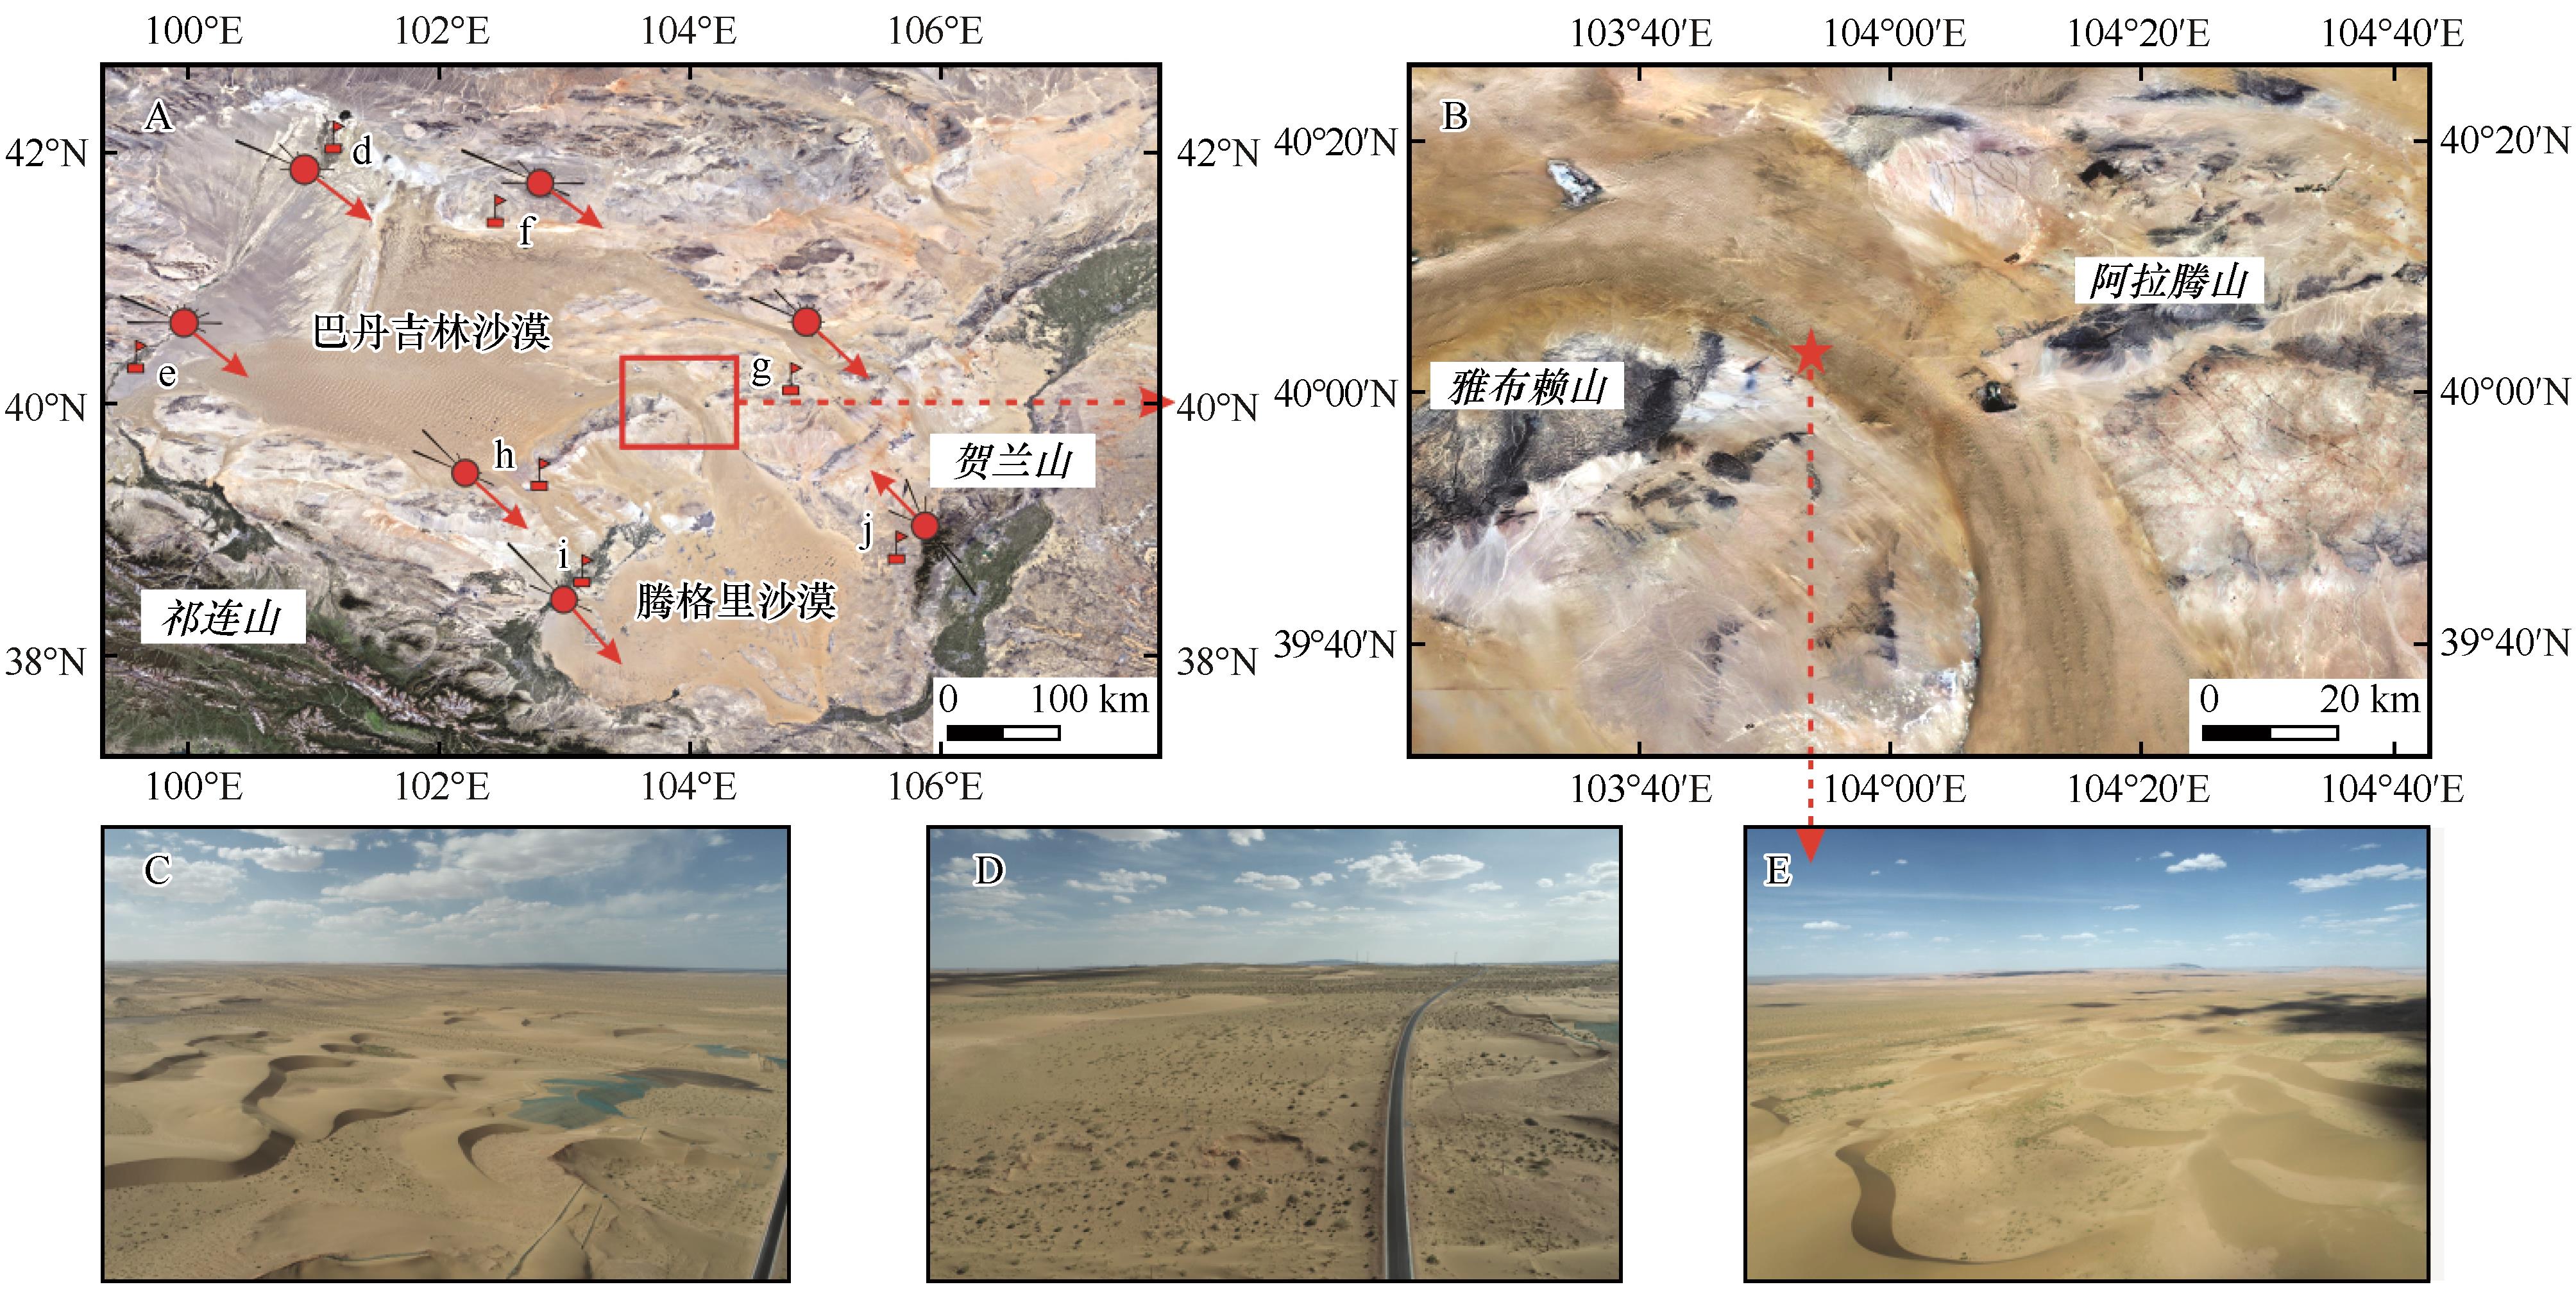 Dune movement in the joint zone of the Badain Jaran Desert and Tengger Desert